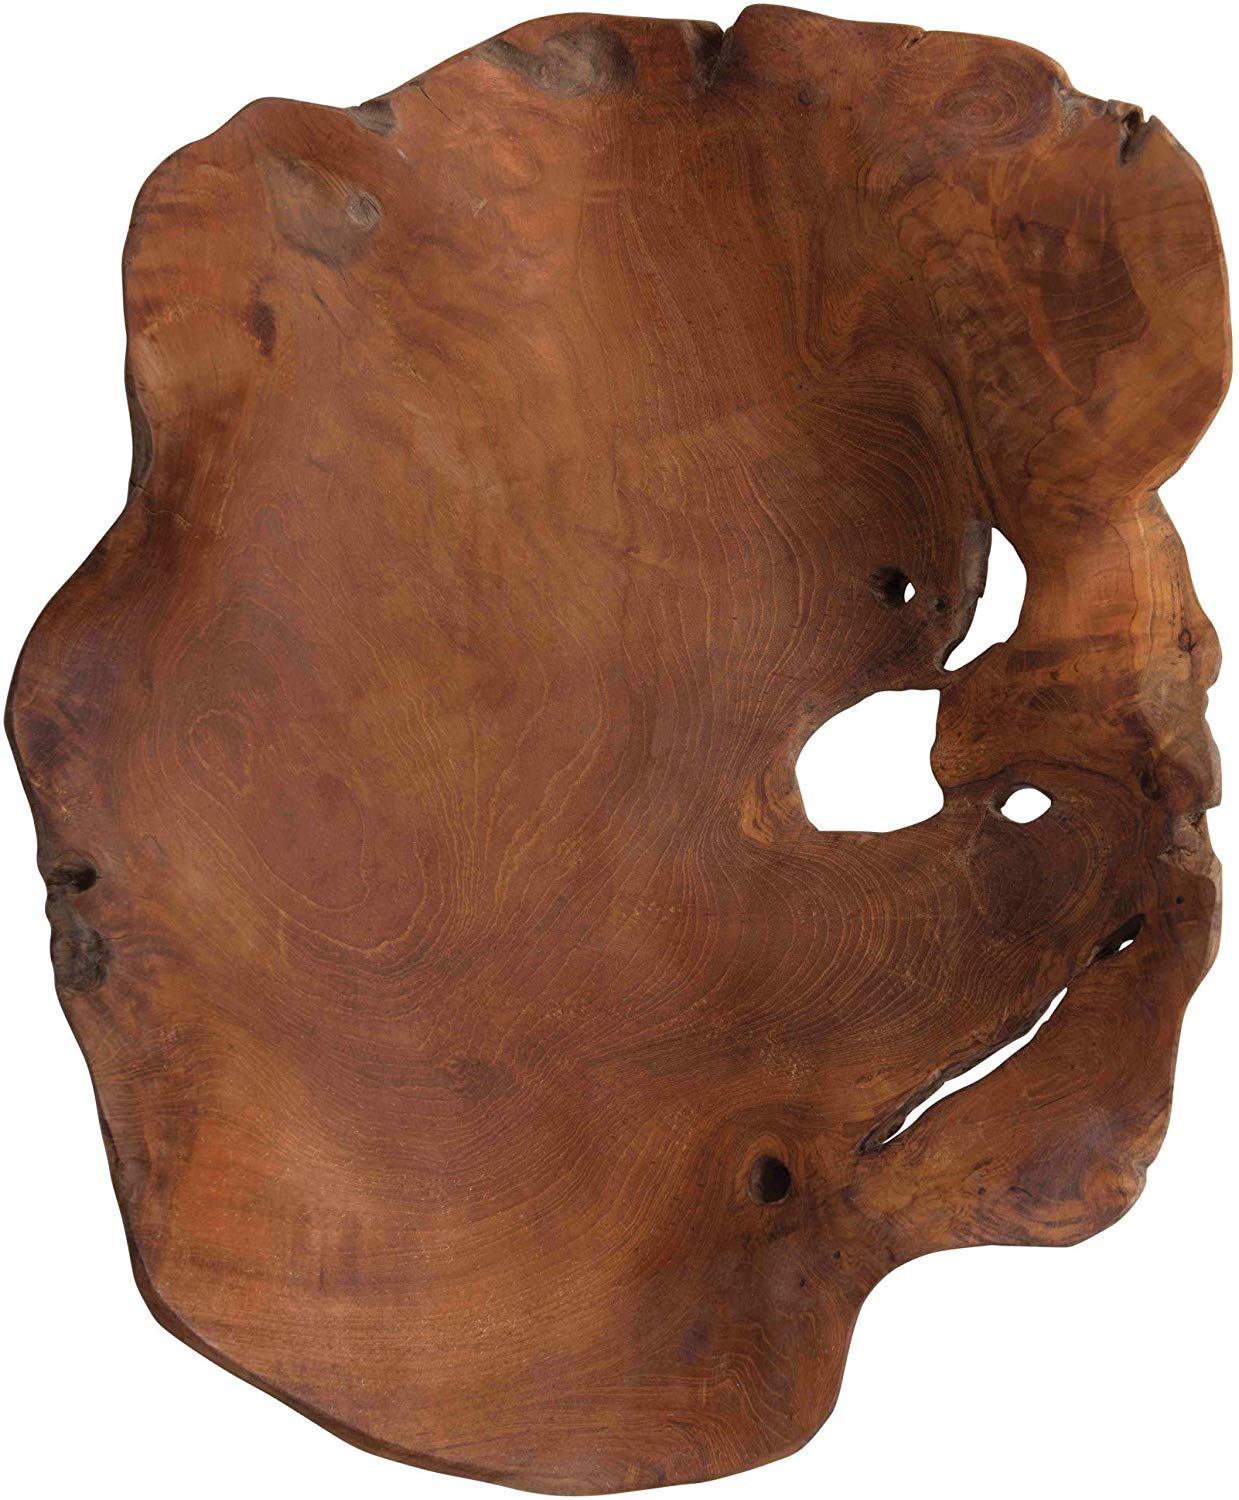 Decorative Hand-Carved Teak Wood Bowl - Brown - Mellow Monkey